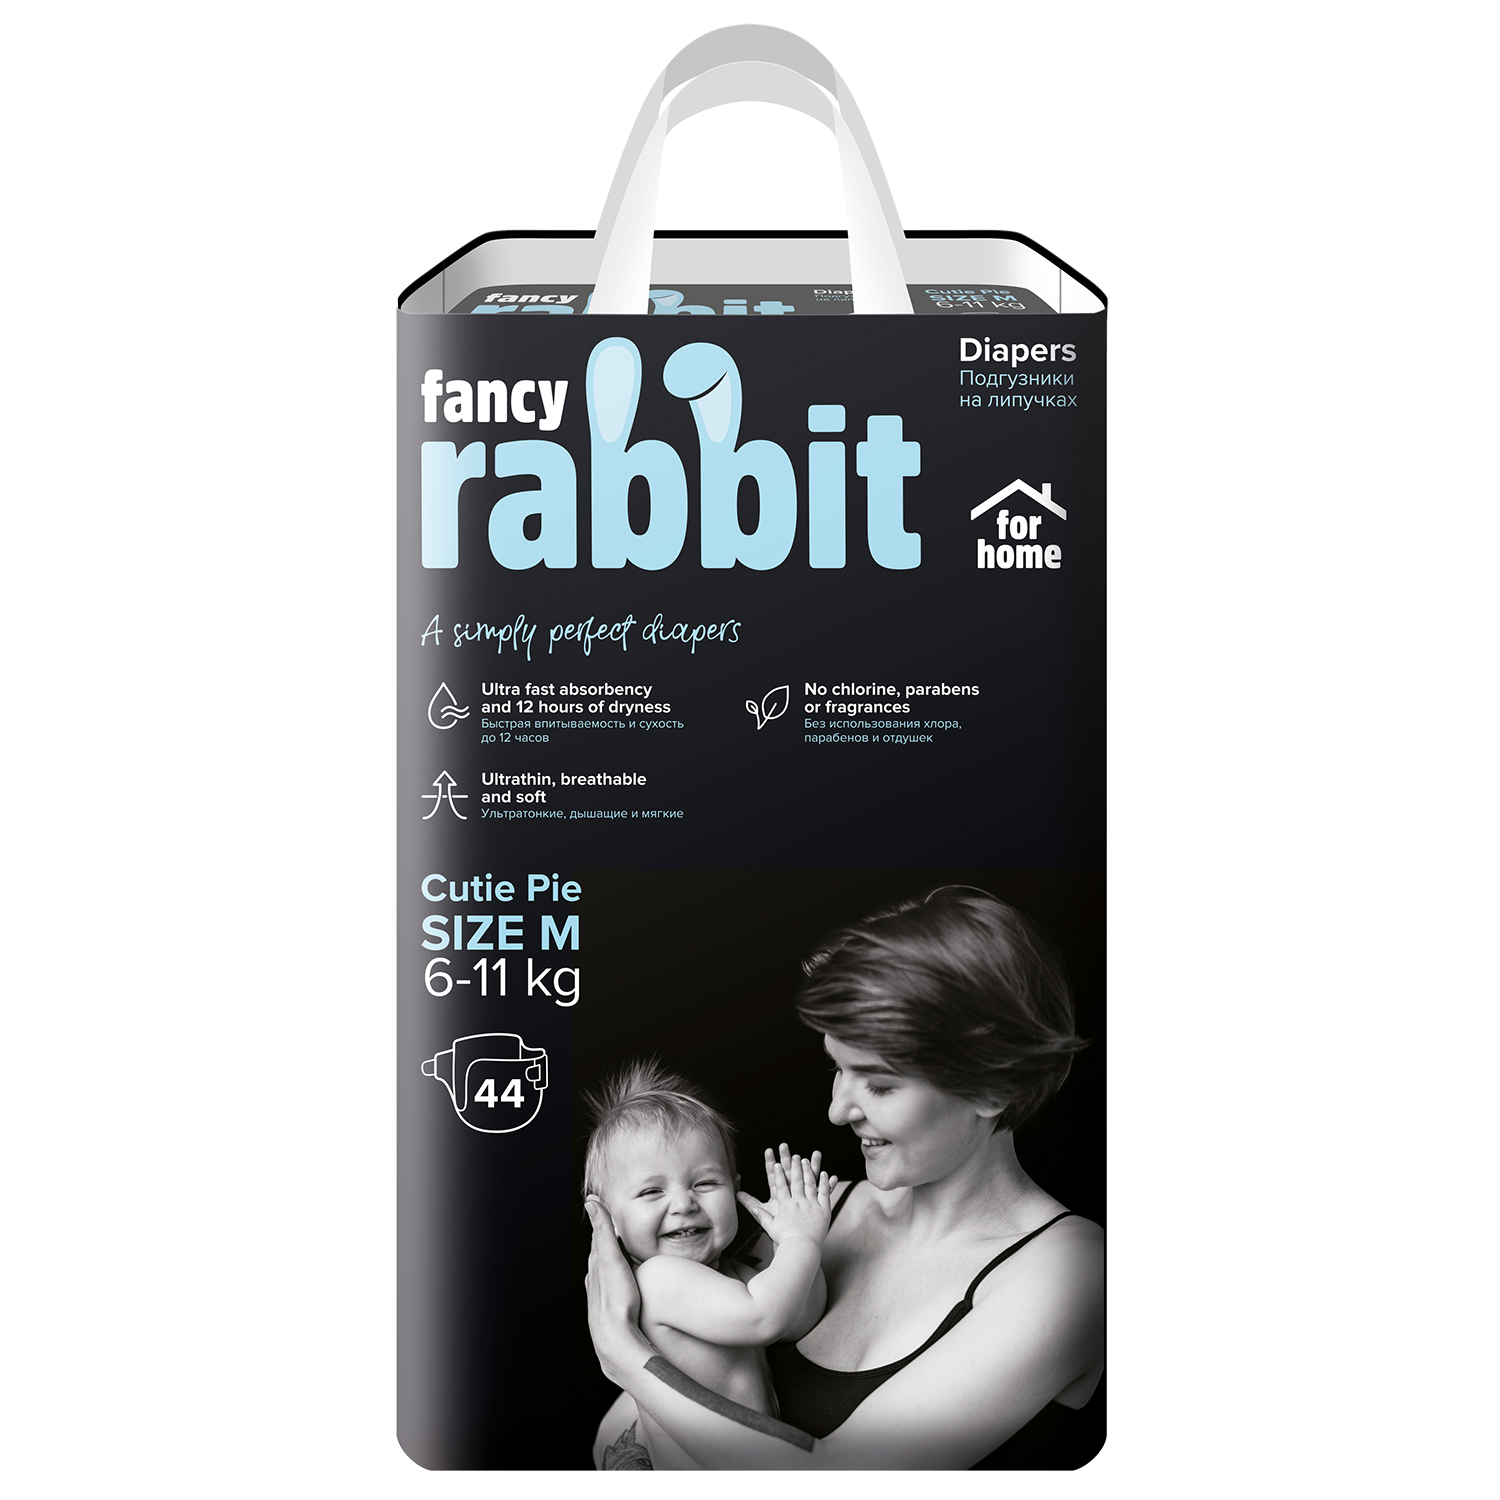 фото Трусики-подгузники fancy rabbit for home 6-11 кг, размер м, 44 шт